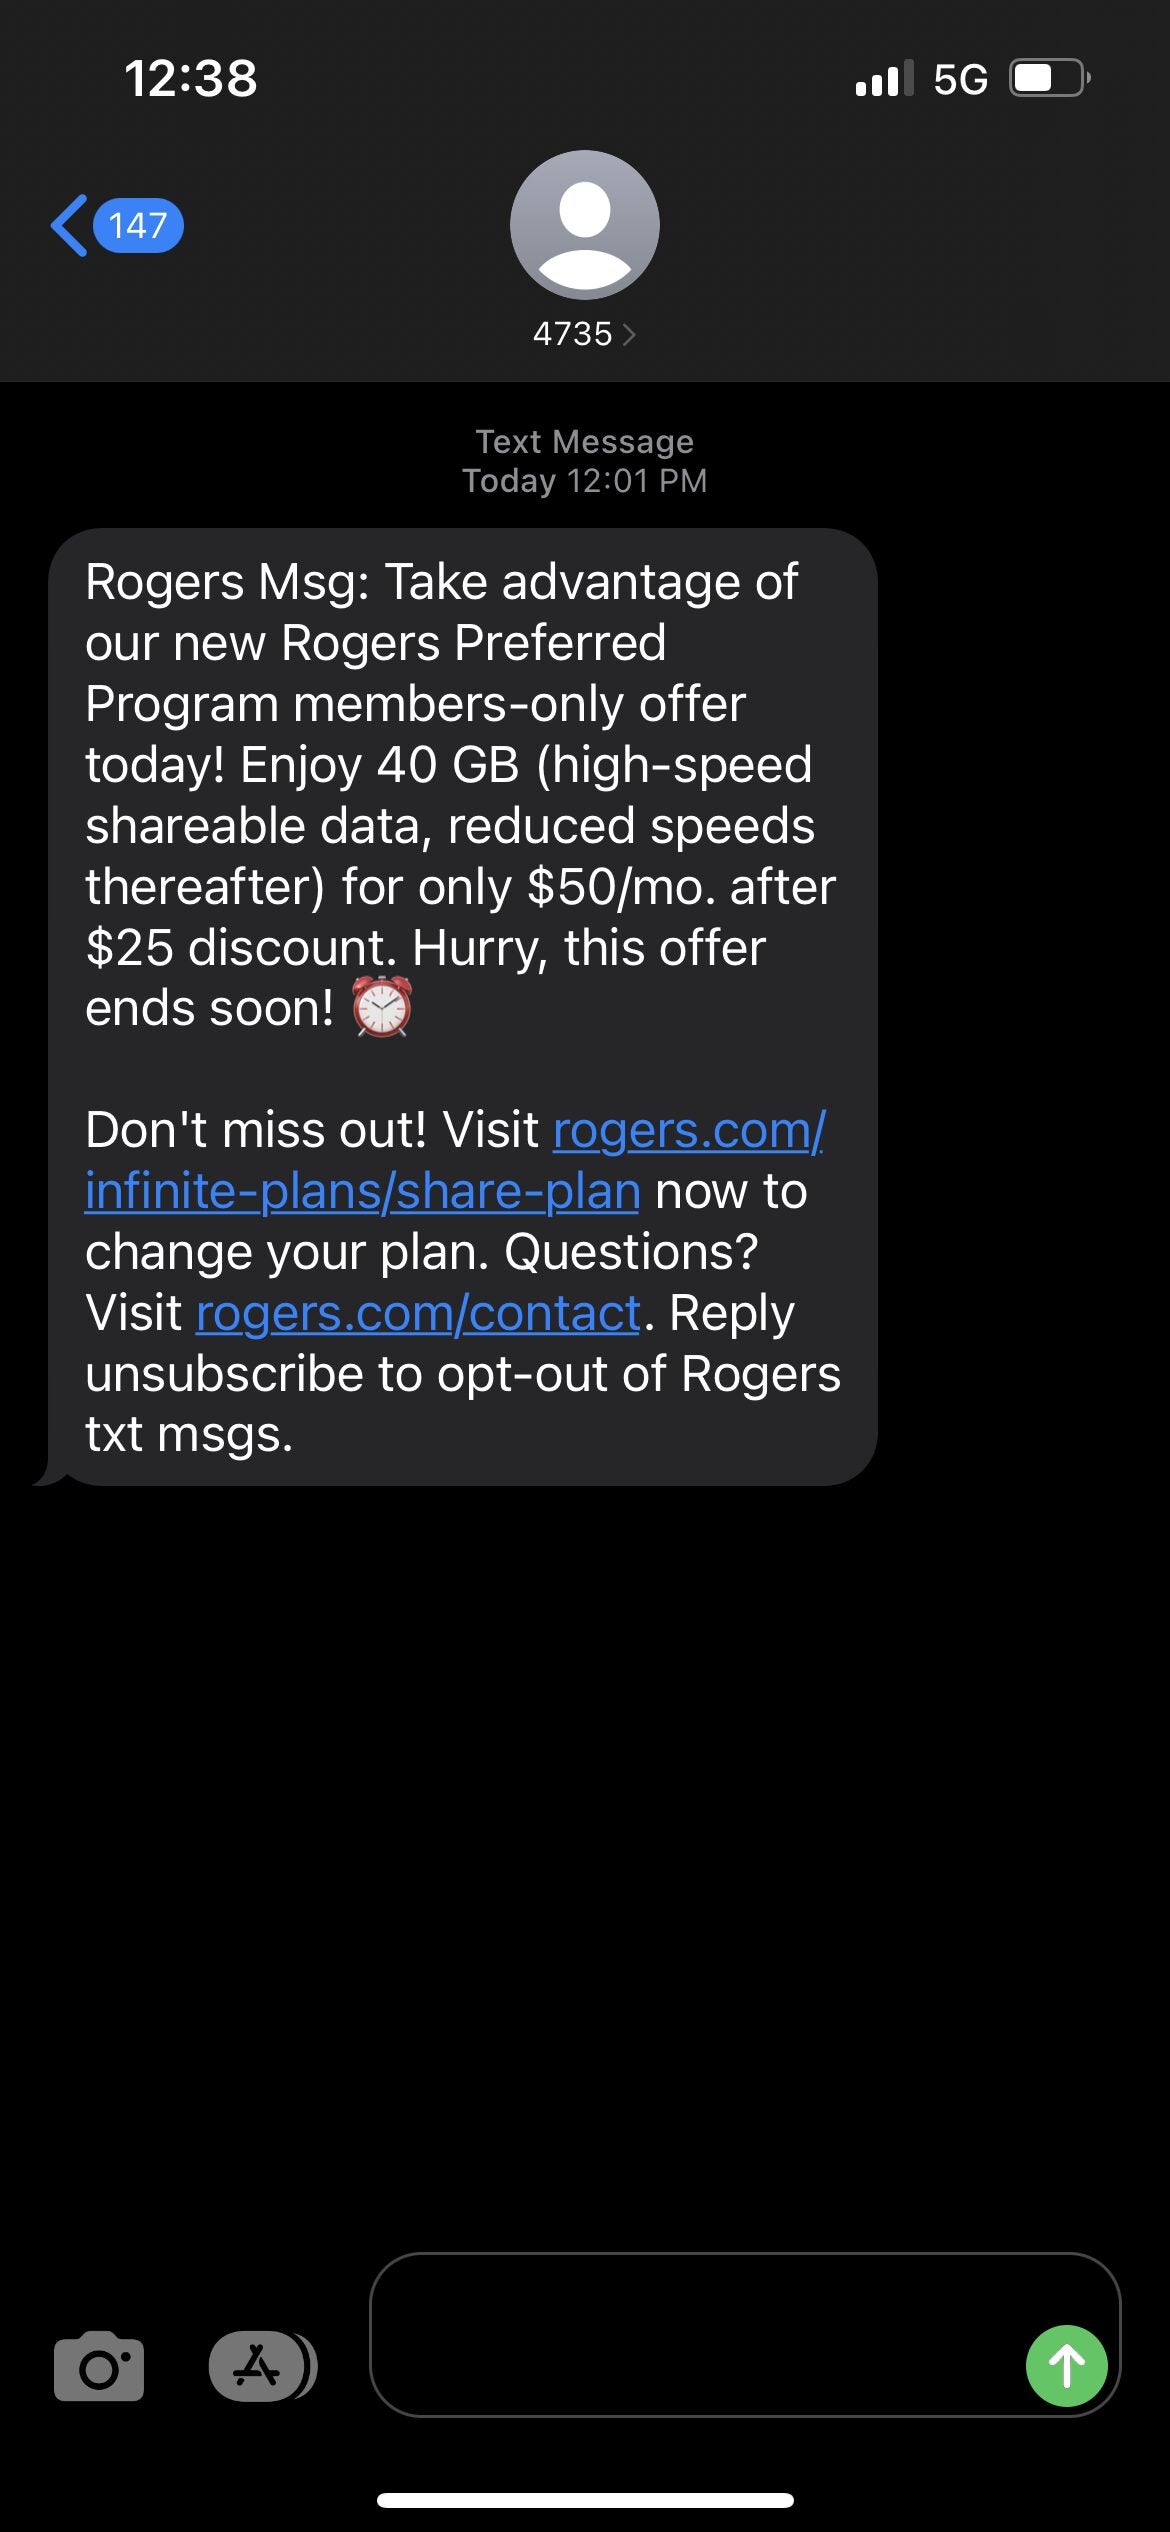 Rogers Preferred Program